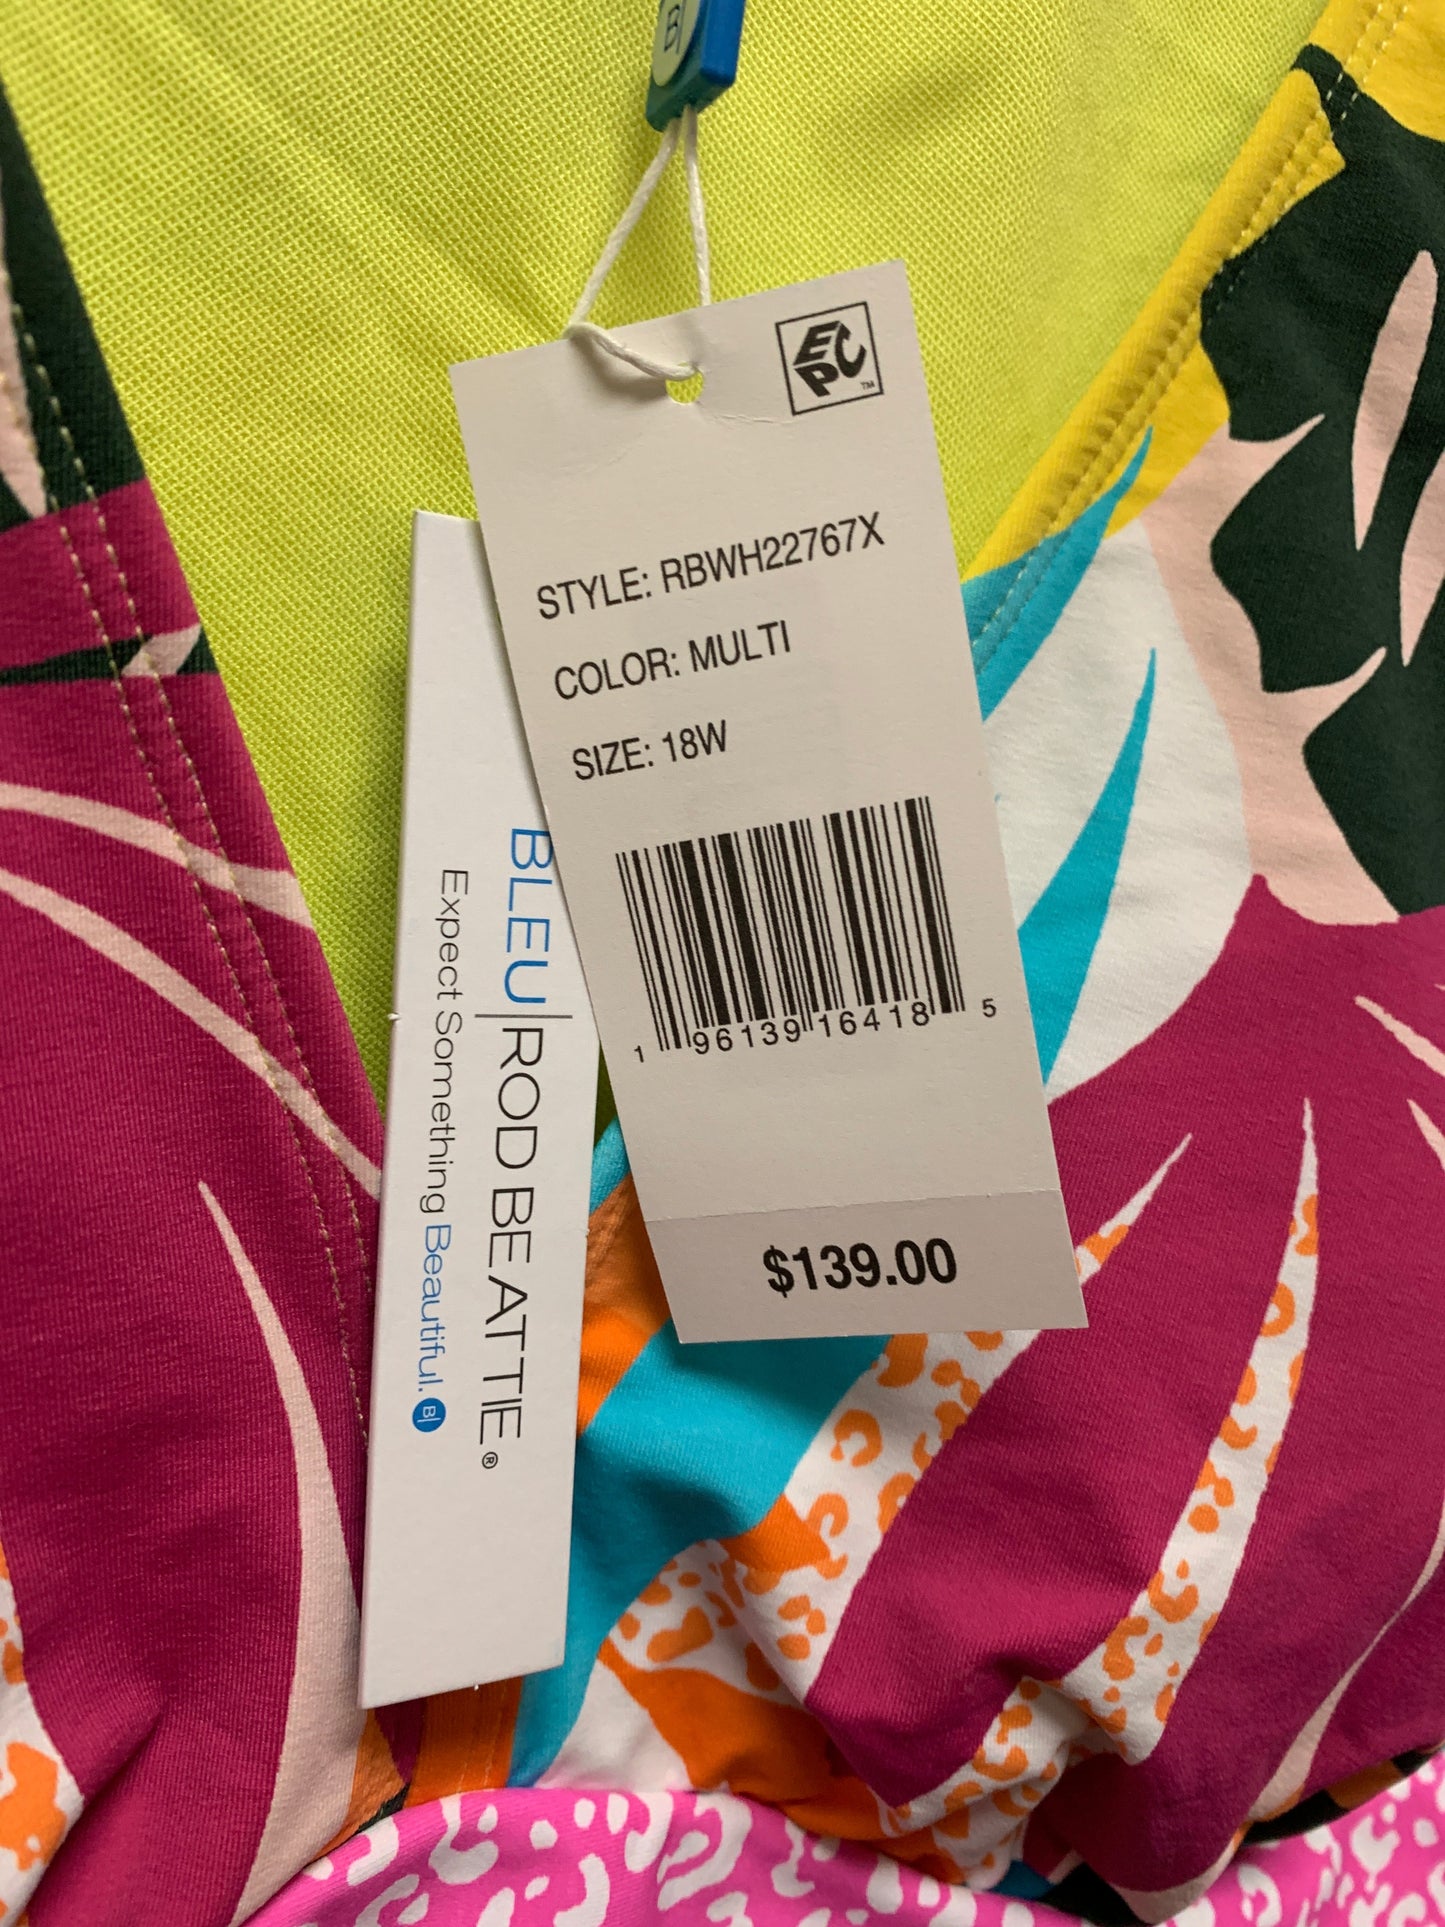 Tropical Print Swimsuit Bleu, Size 1x